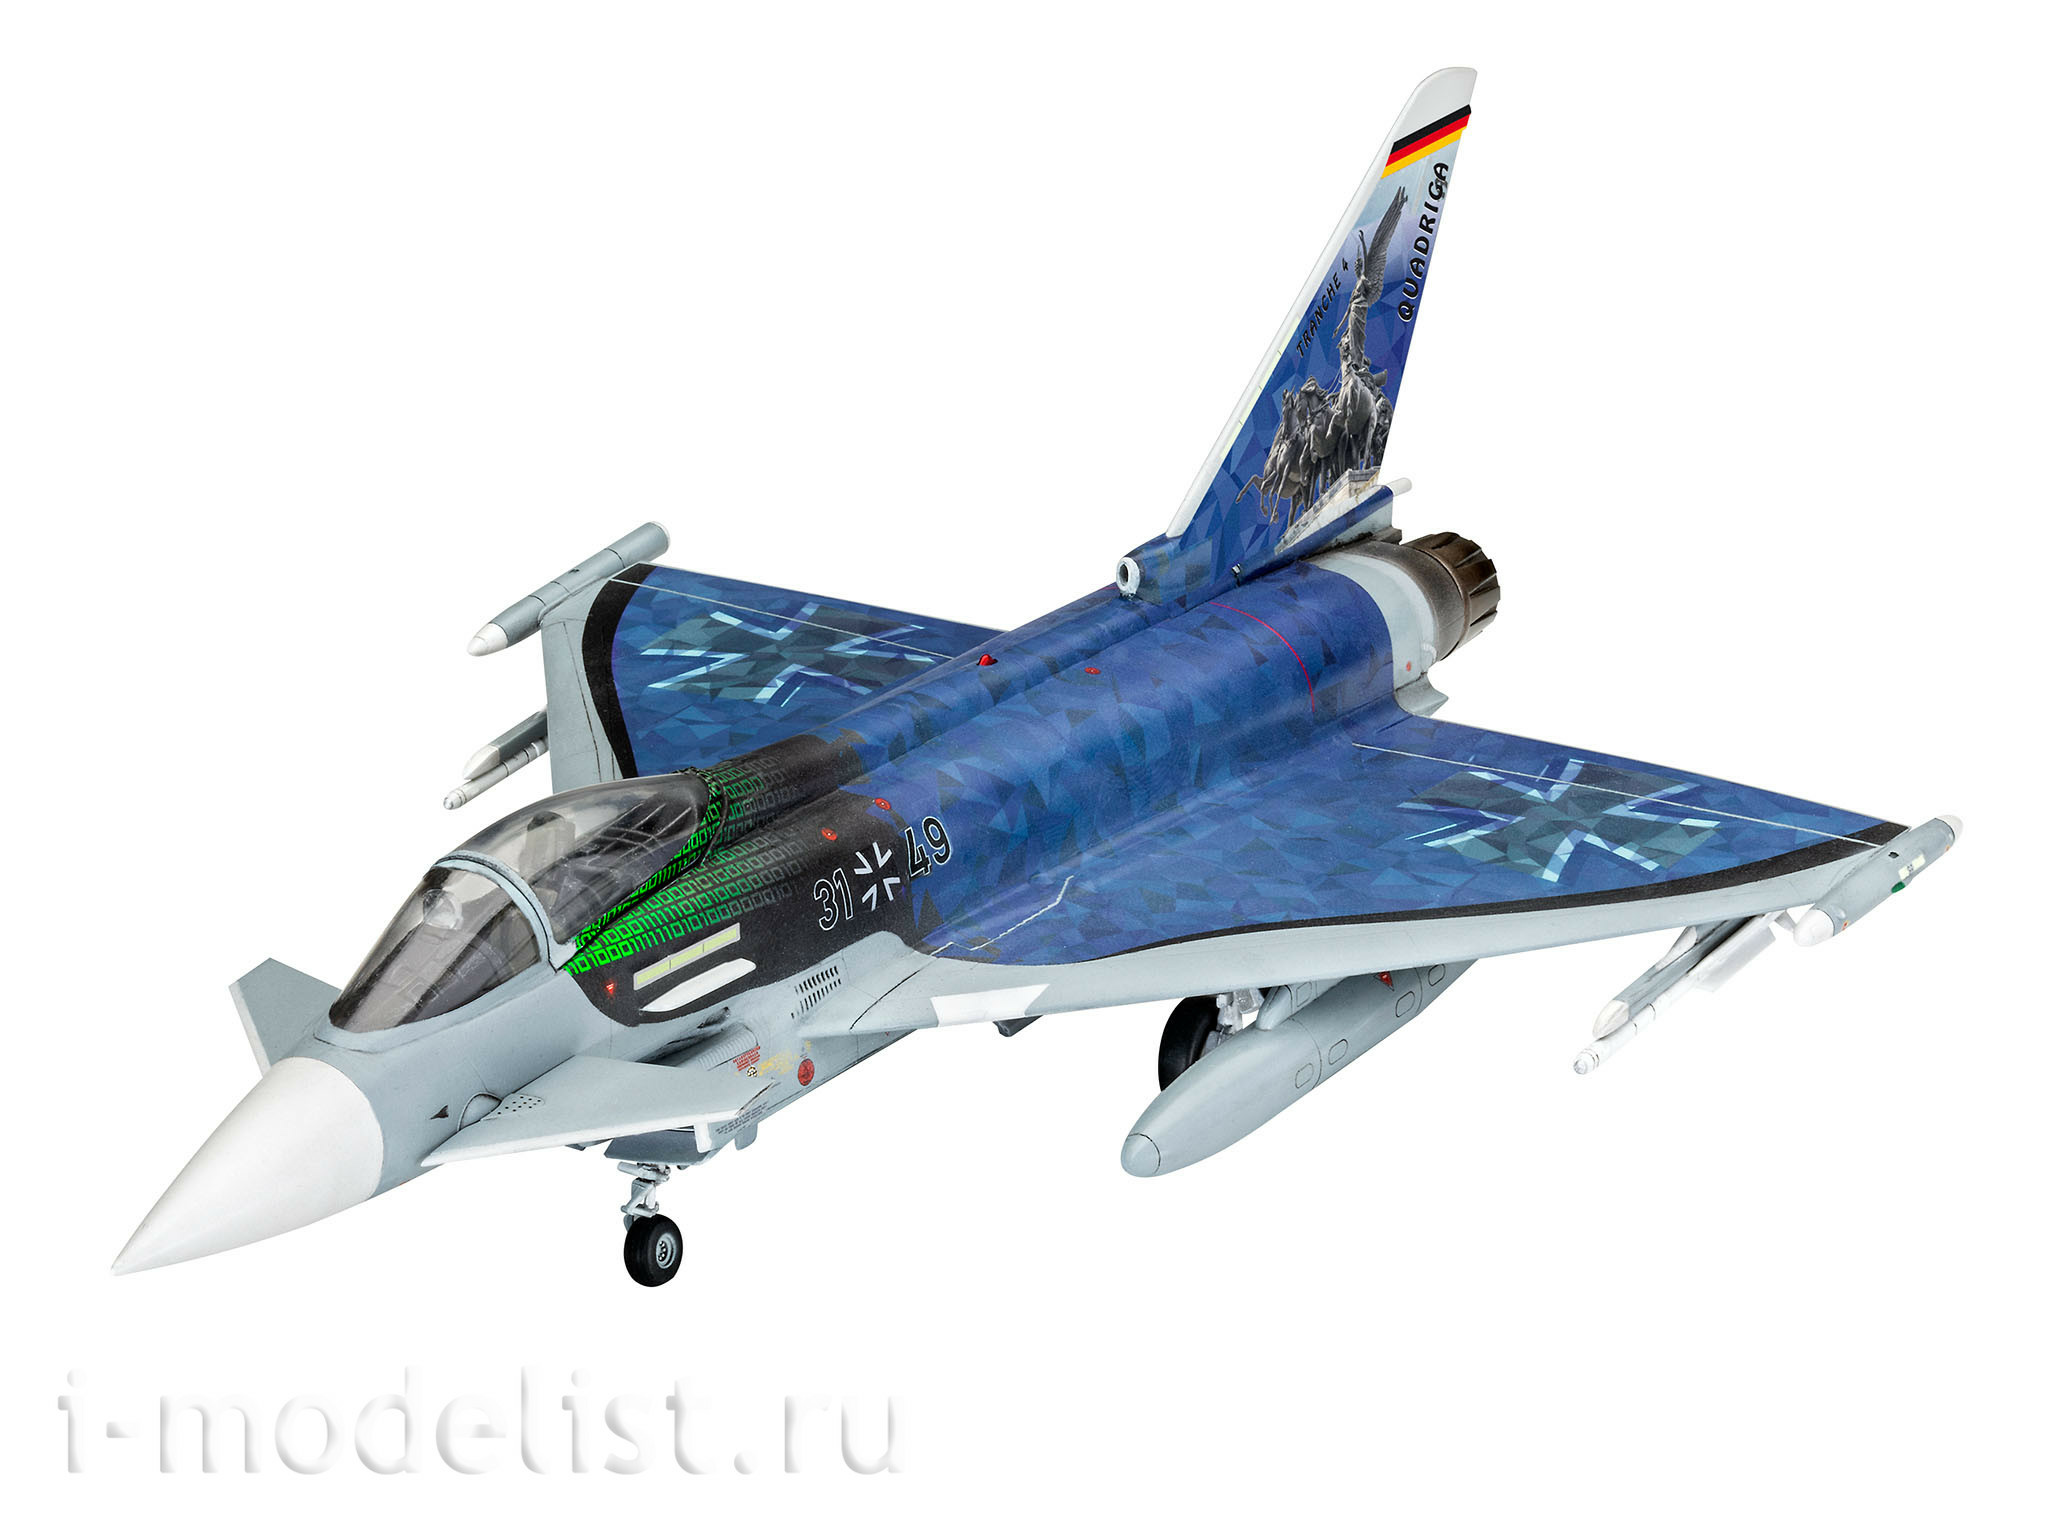 03843 Revell 1/72 Истребитель Eurofighter 